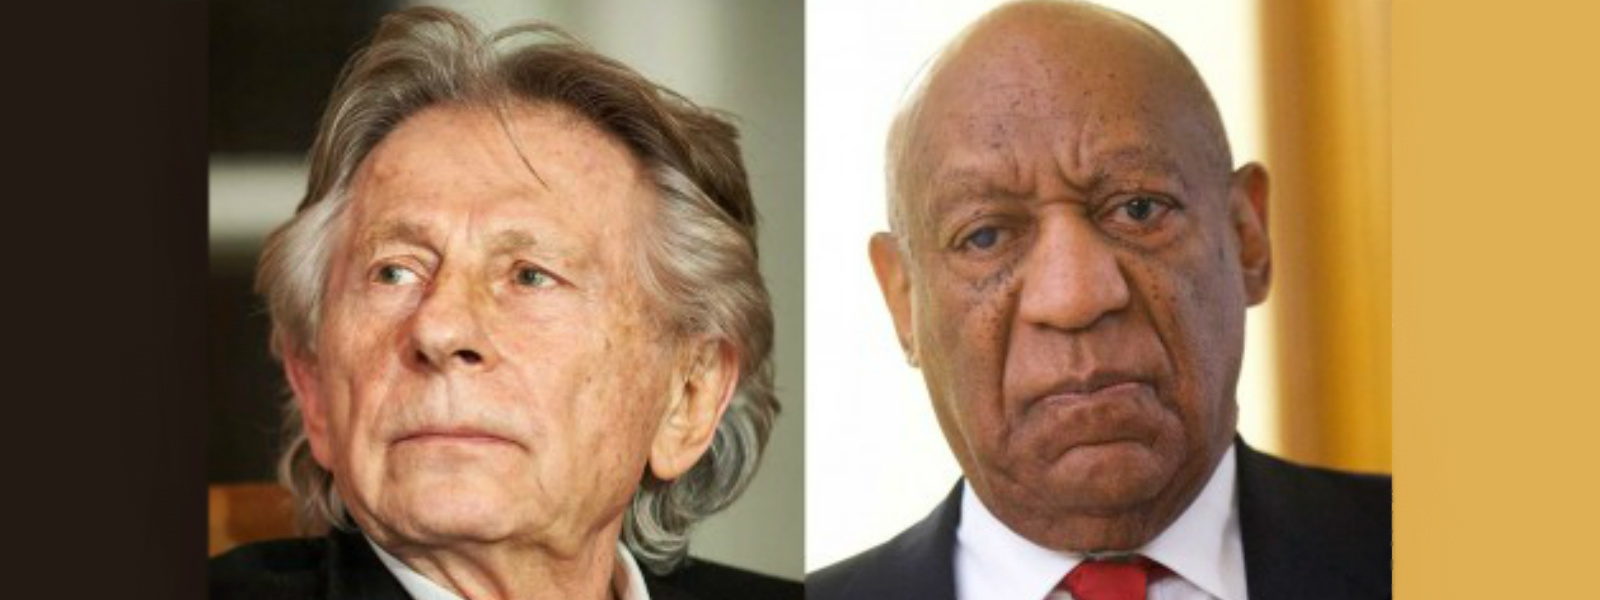 Cosby and Polanski expelled from Oscars academy